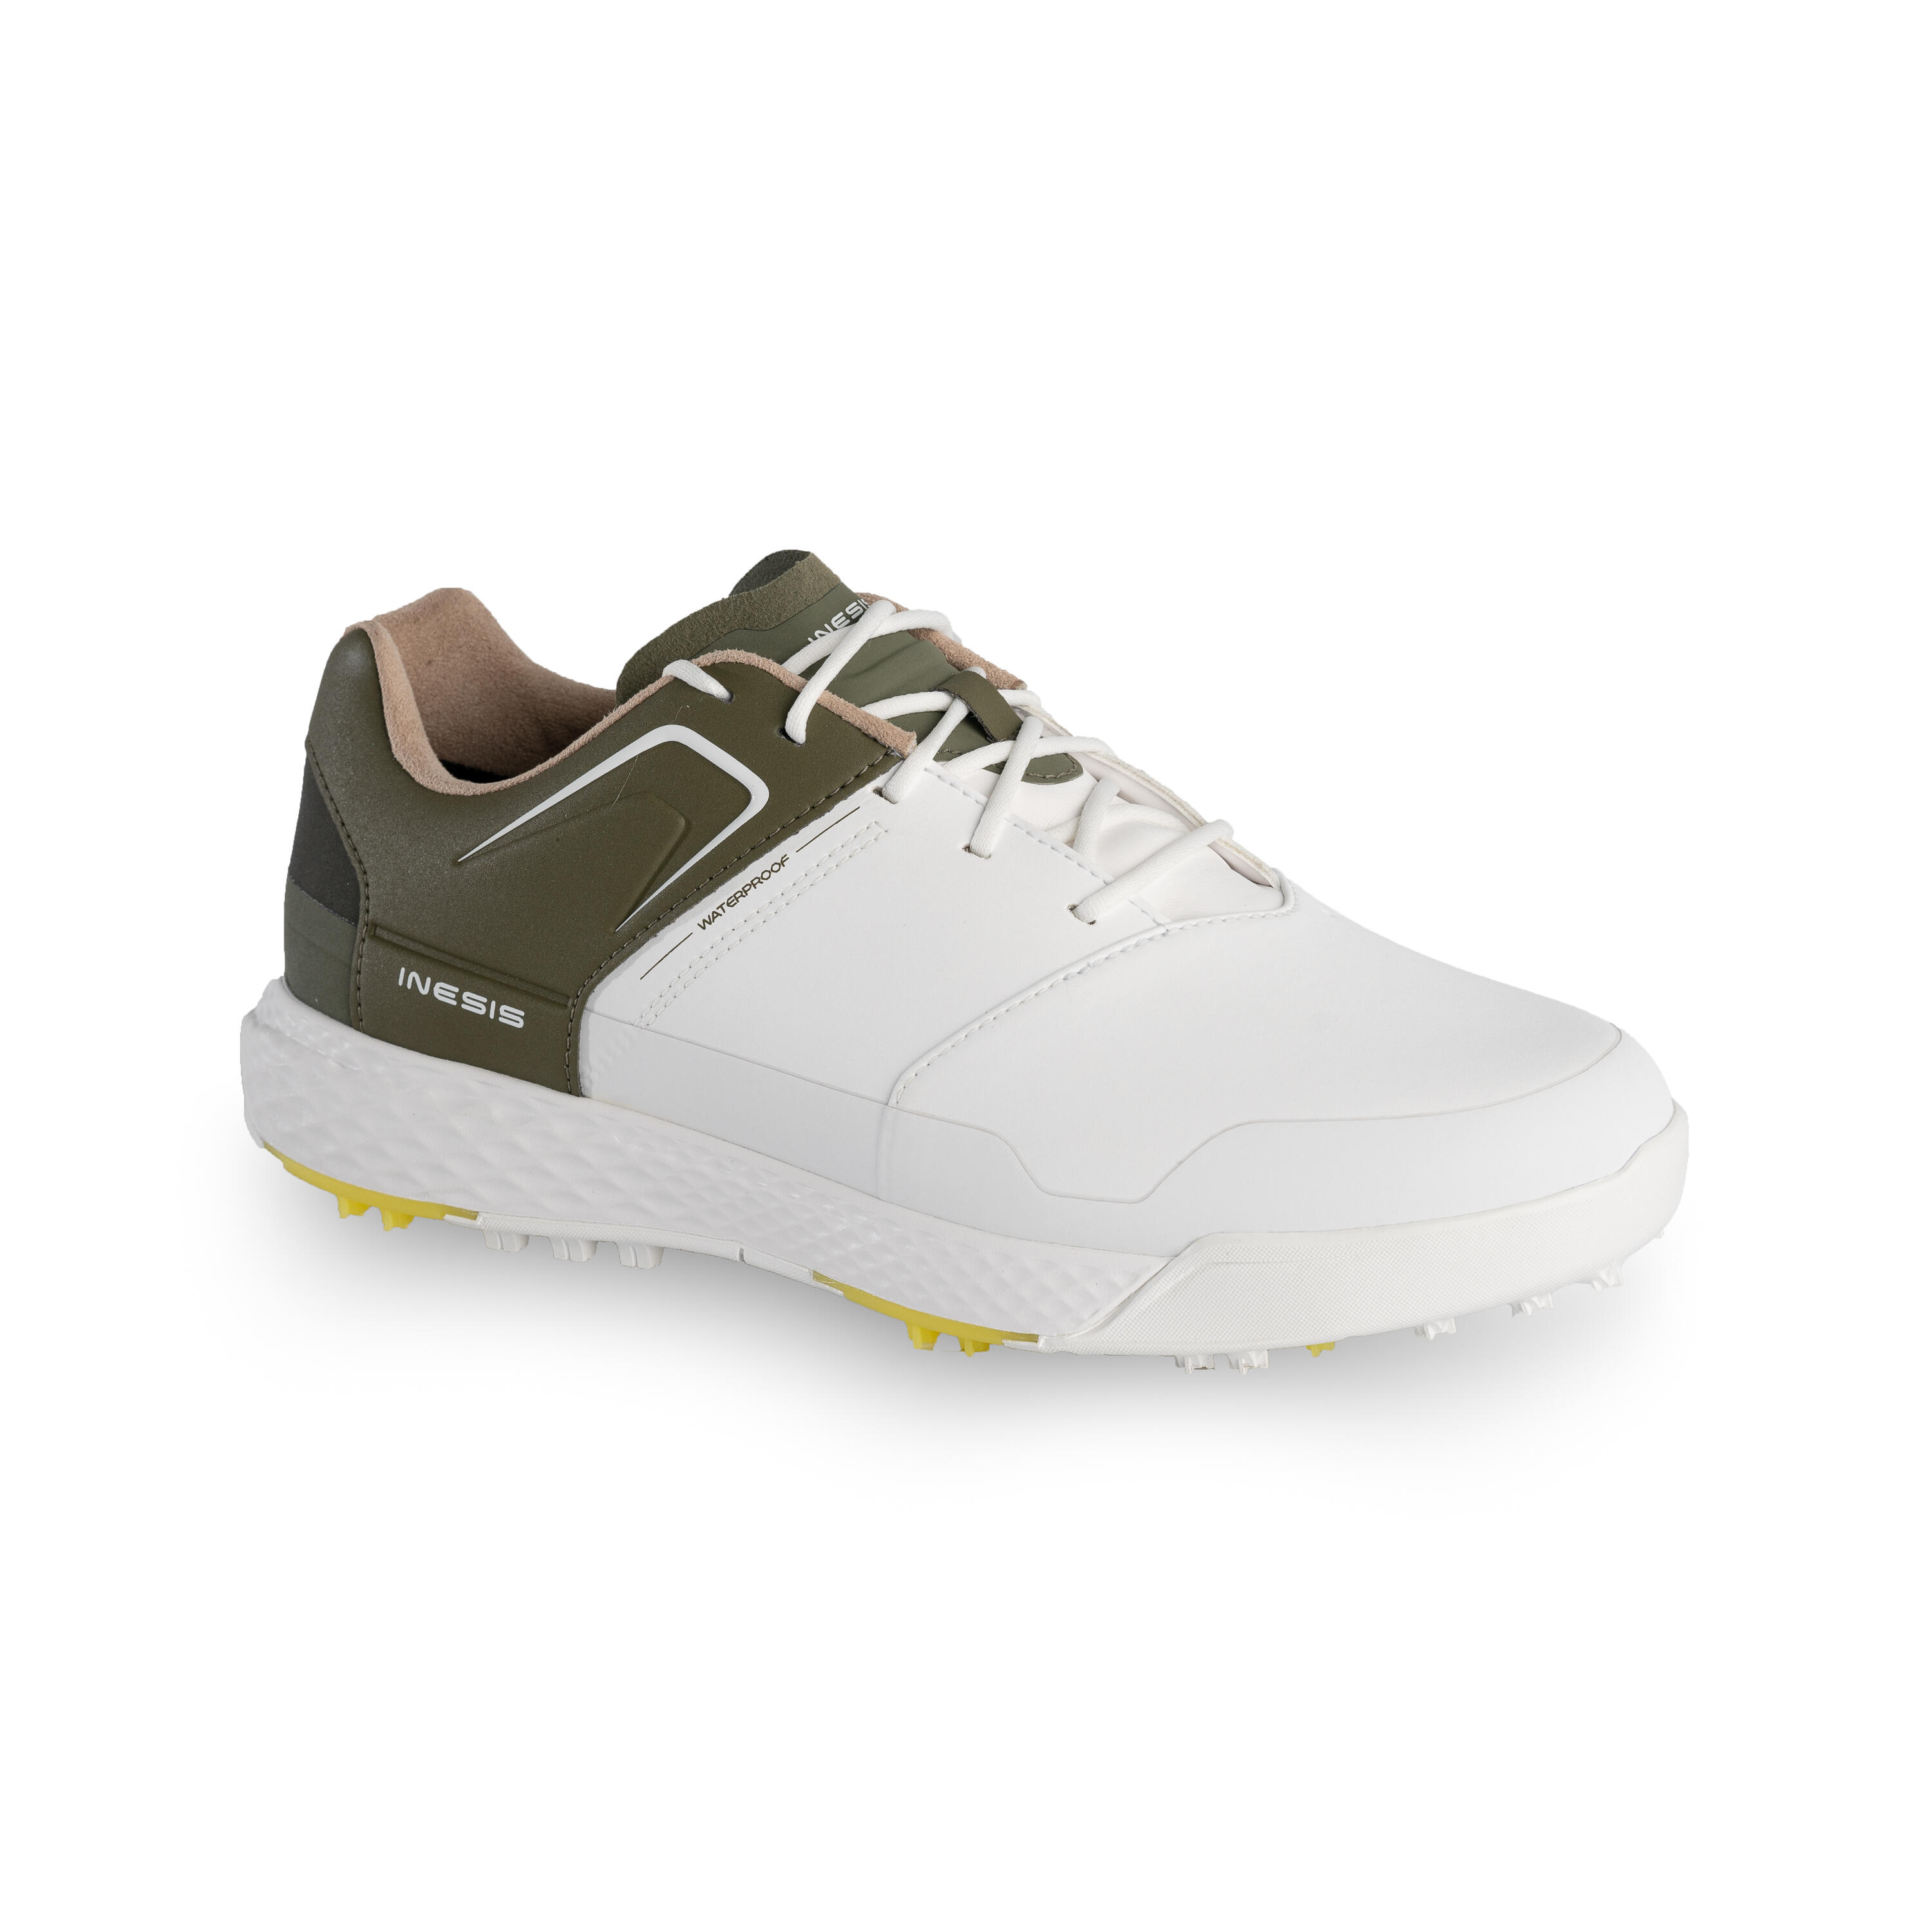 Men’s golf waterproof grip shoes - white and khaki 1/7